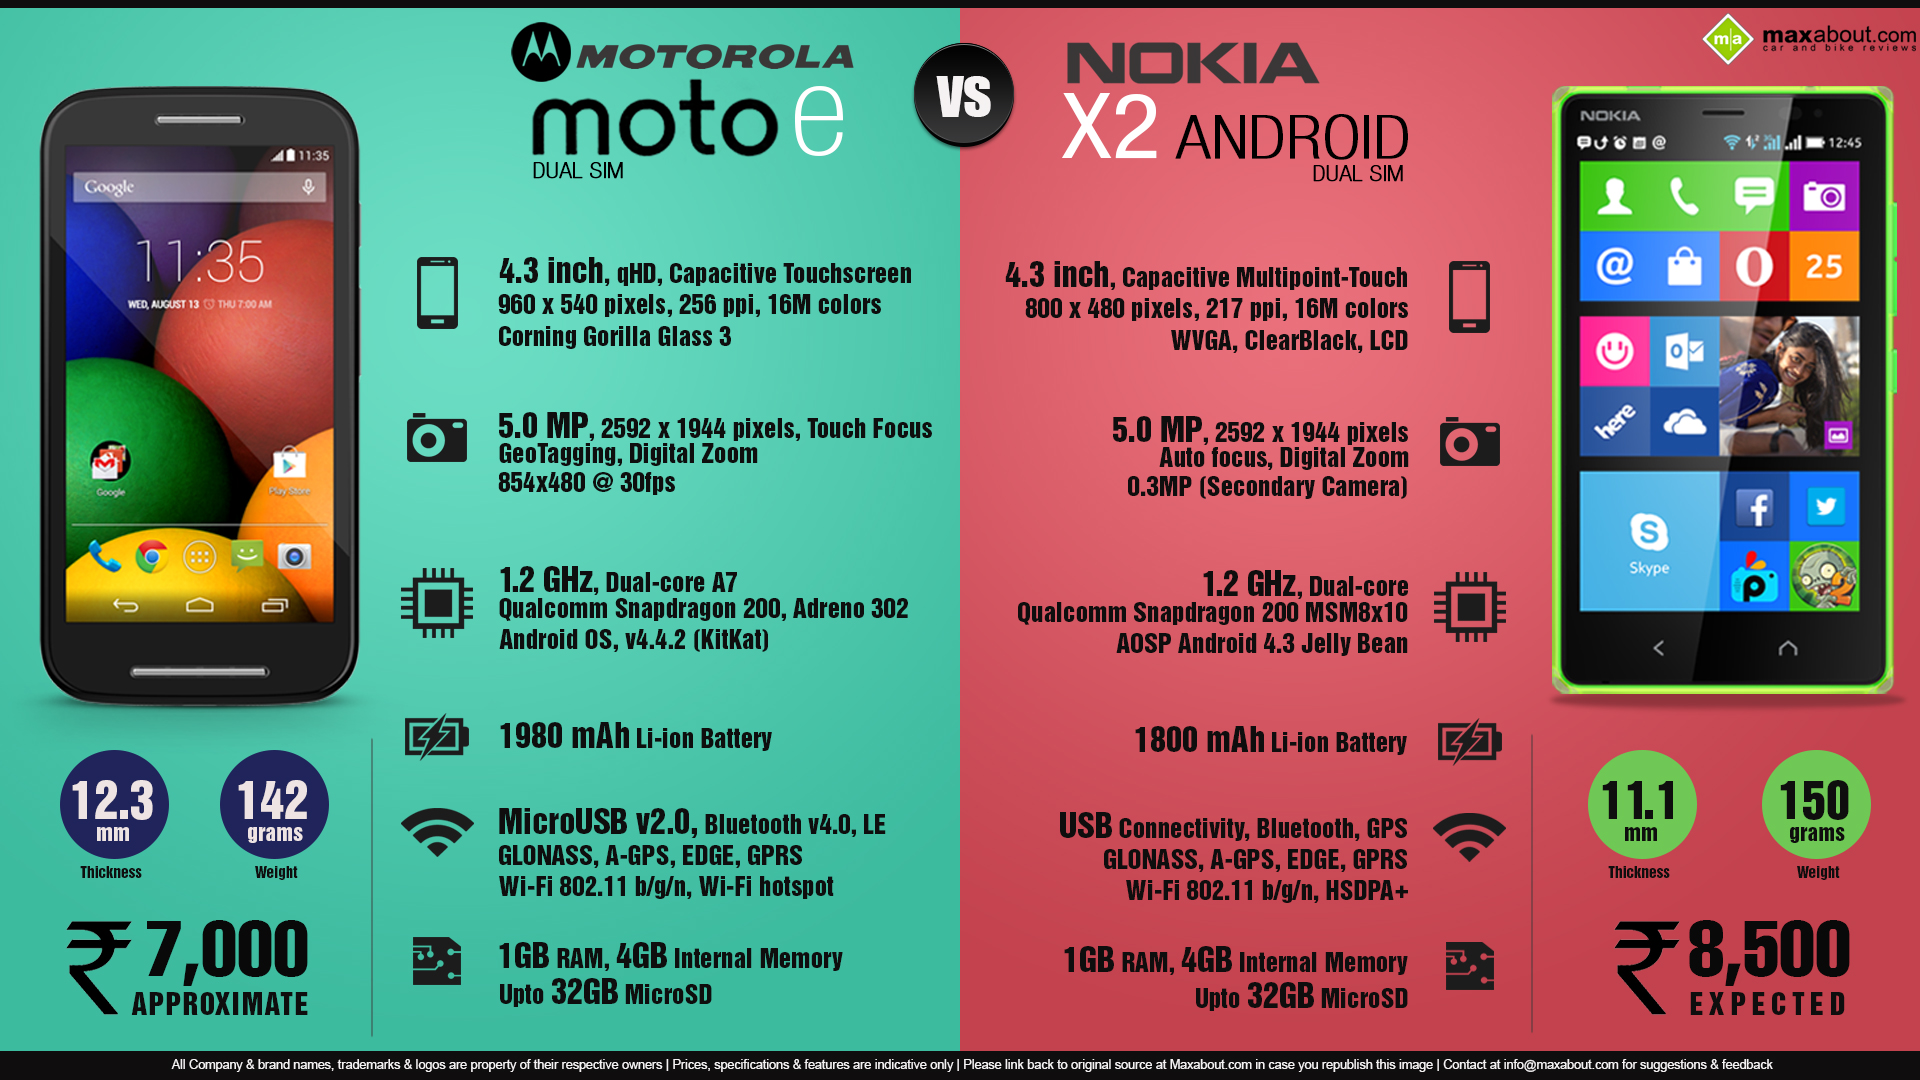 Nokia X2 Android Dual SIM Vs Motorola Moto E Dual SIM